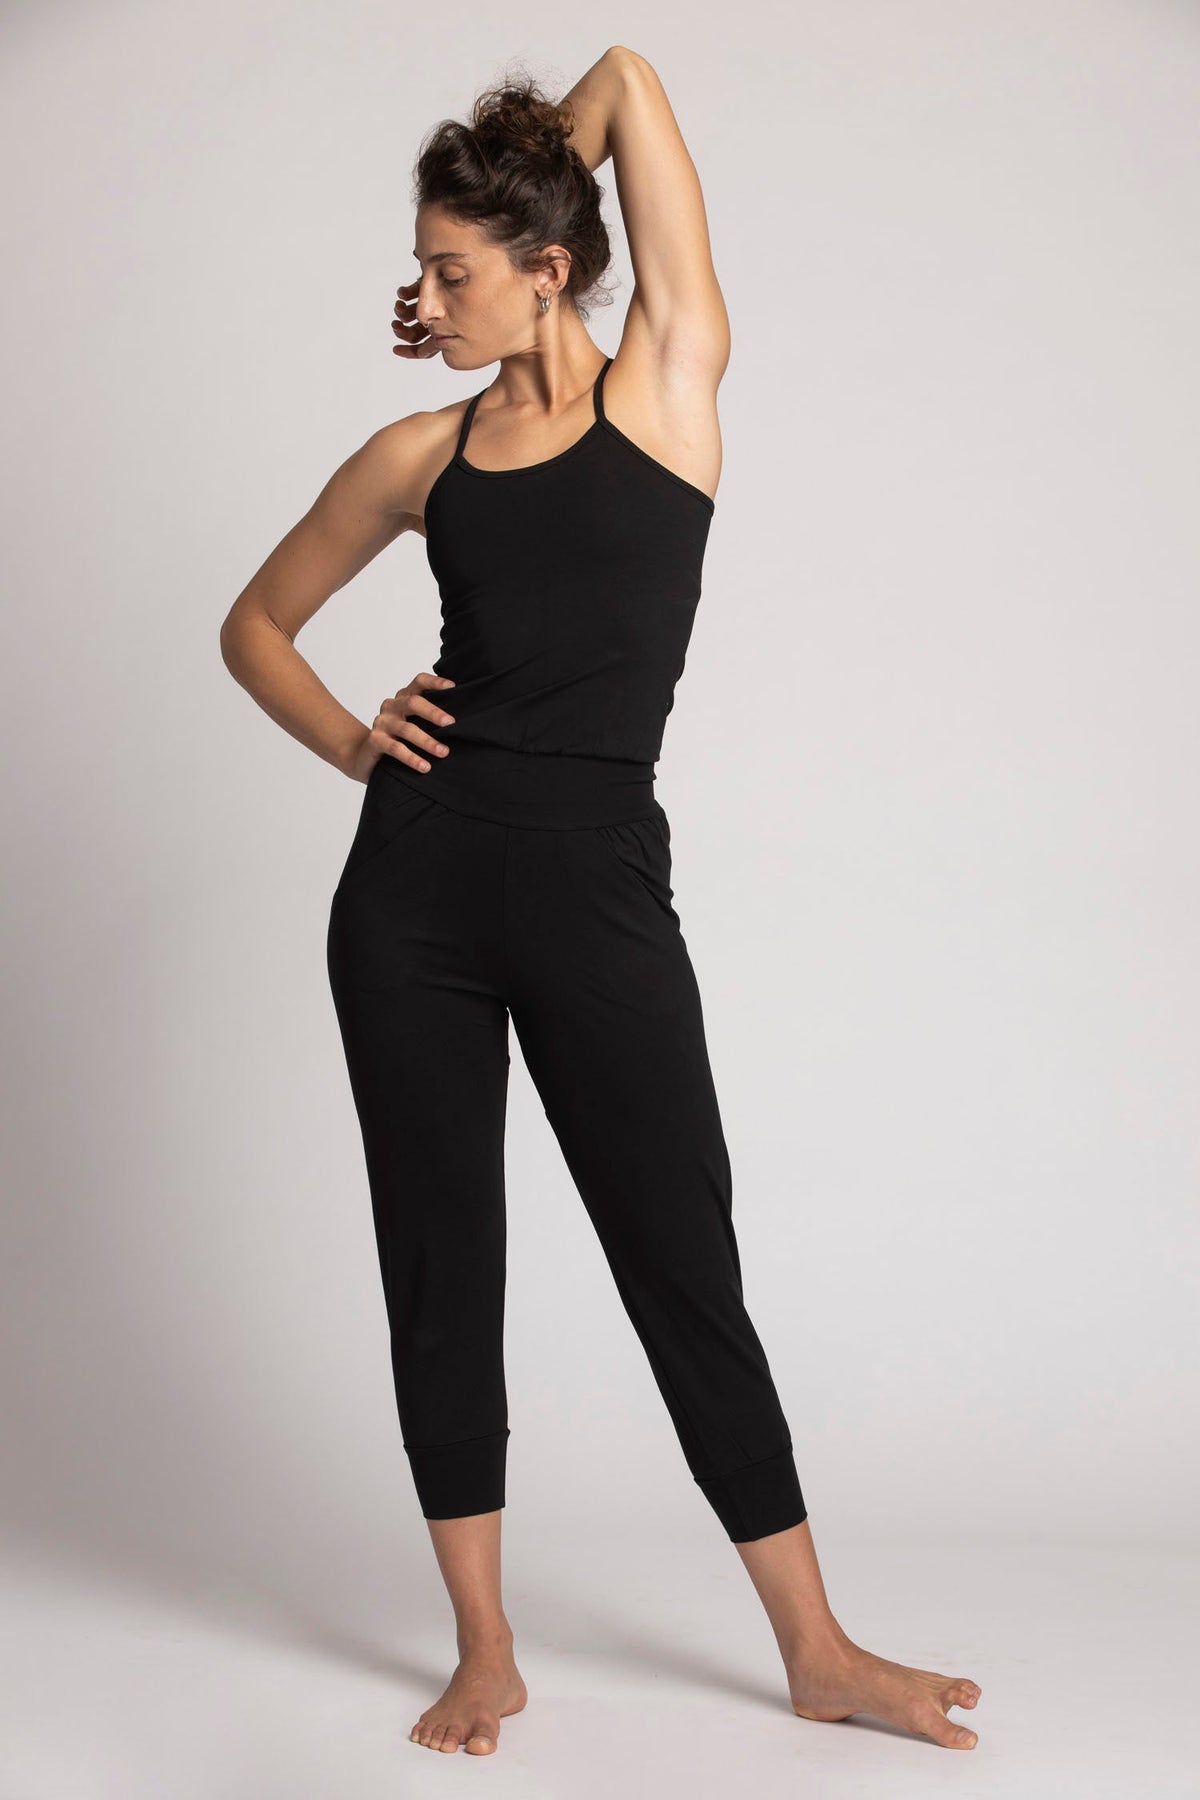 Yoga Jumpsuit womens clothing Ripple Yoga Wear black M 